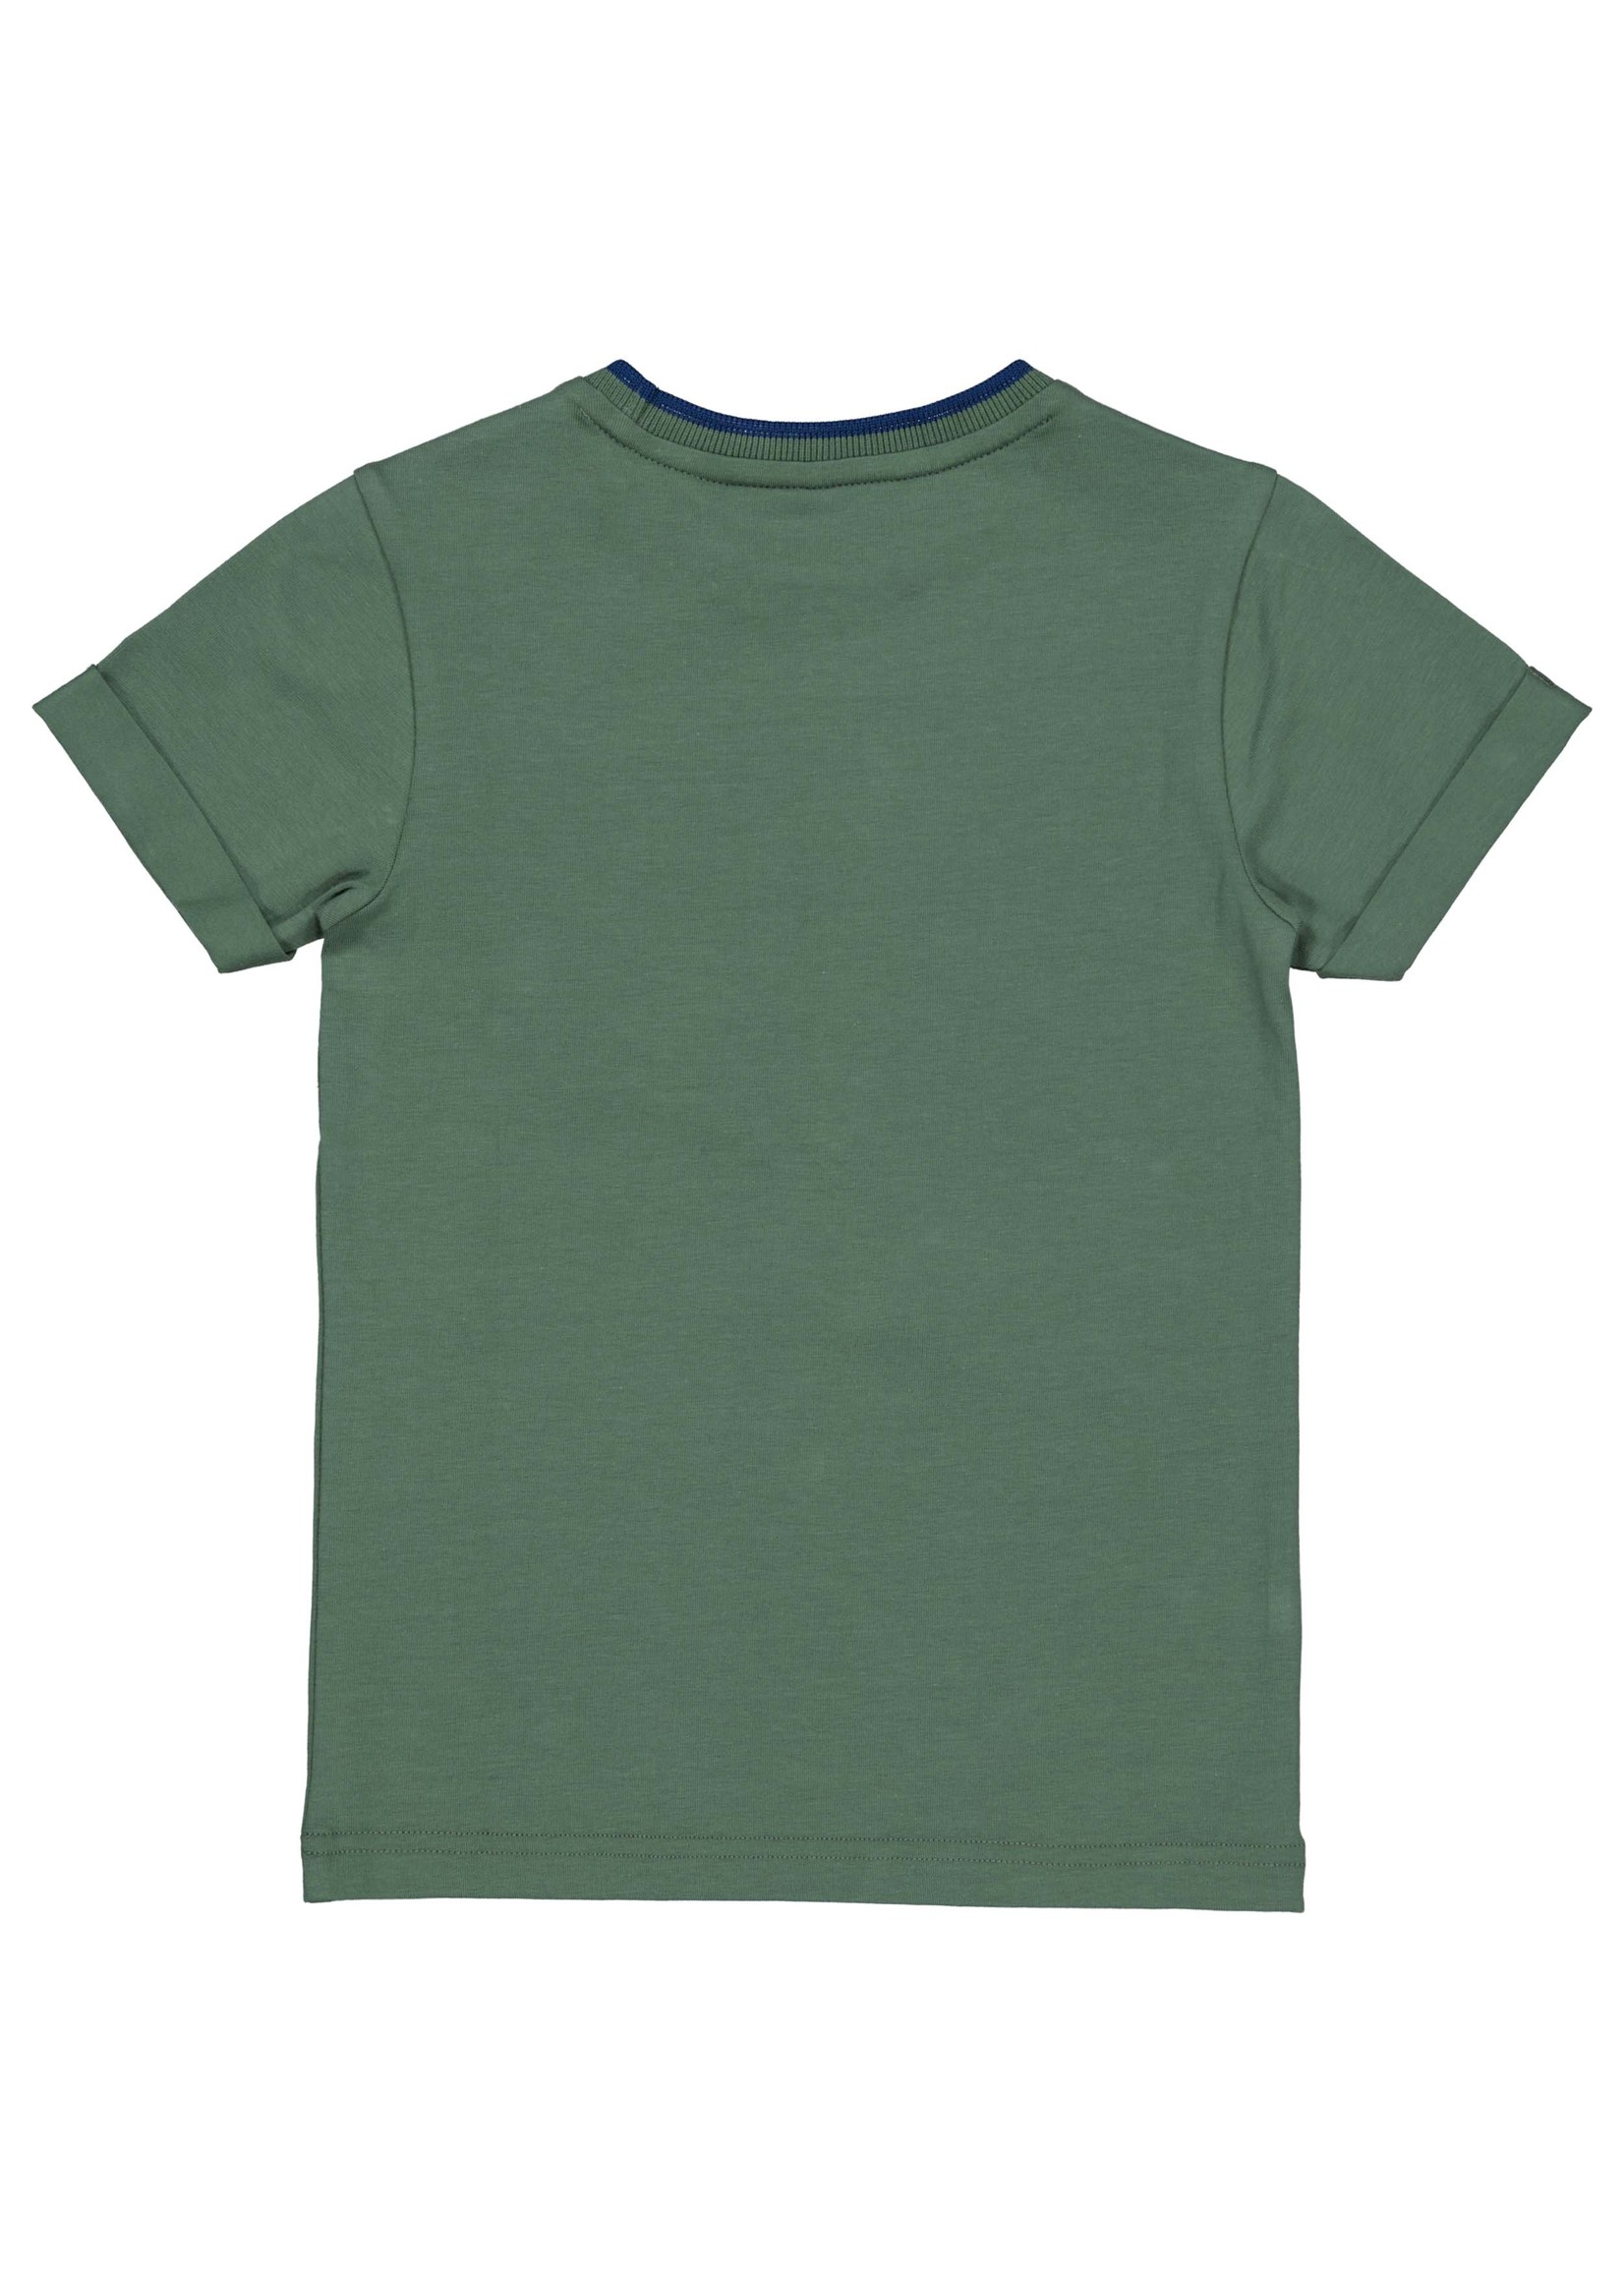 Quapi Shirt green army